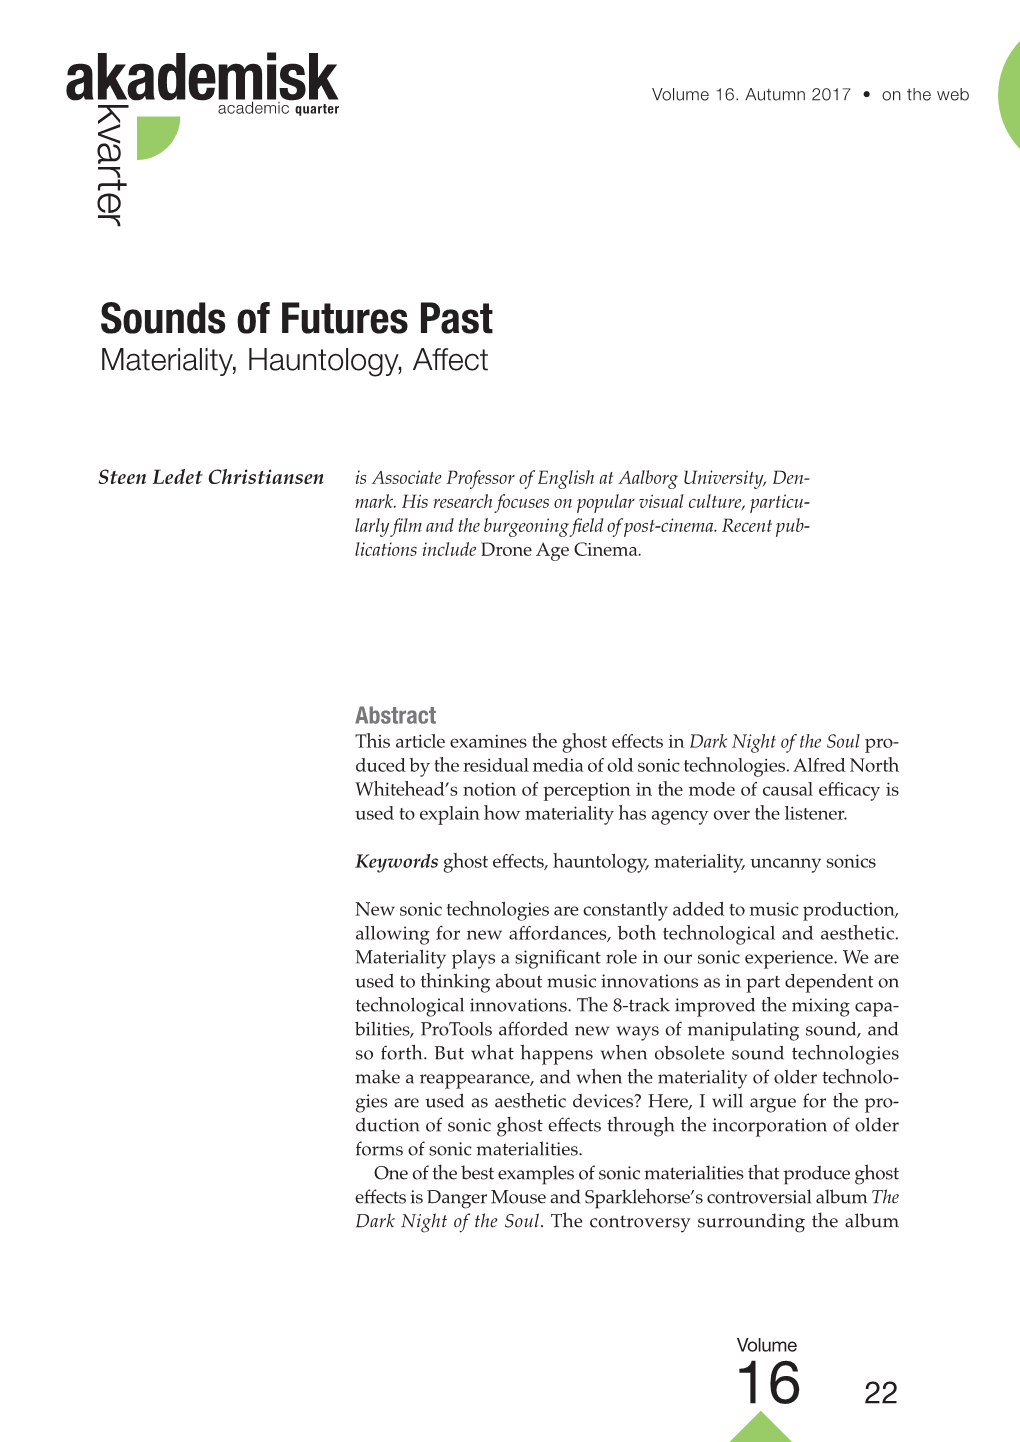 Sounds of Futures Past Sounds Steen Ledet Christiansen